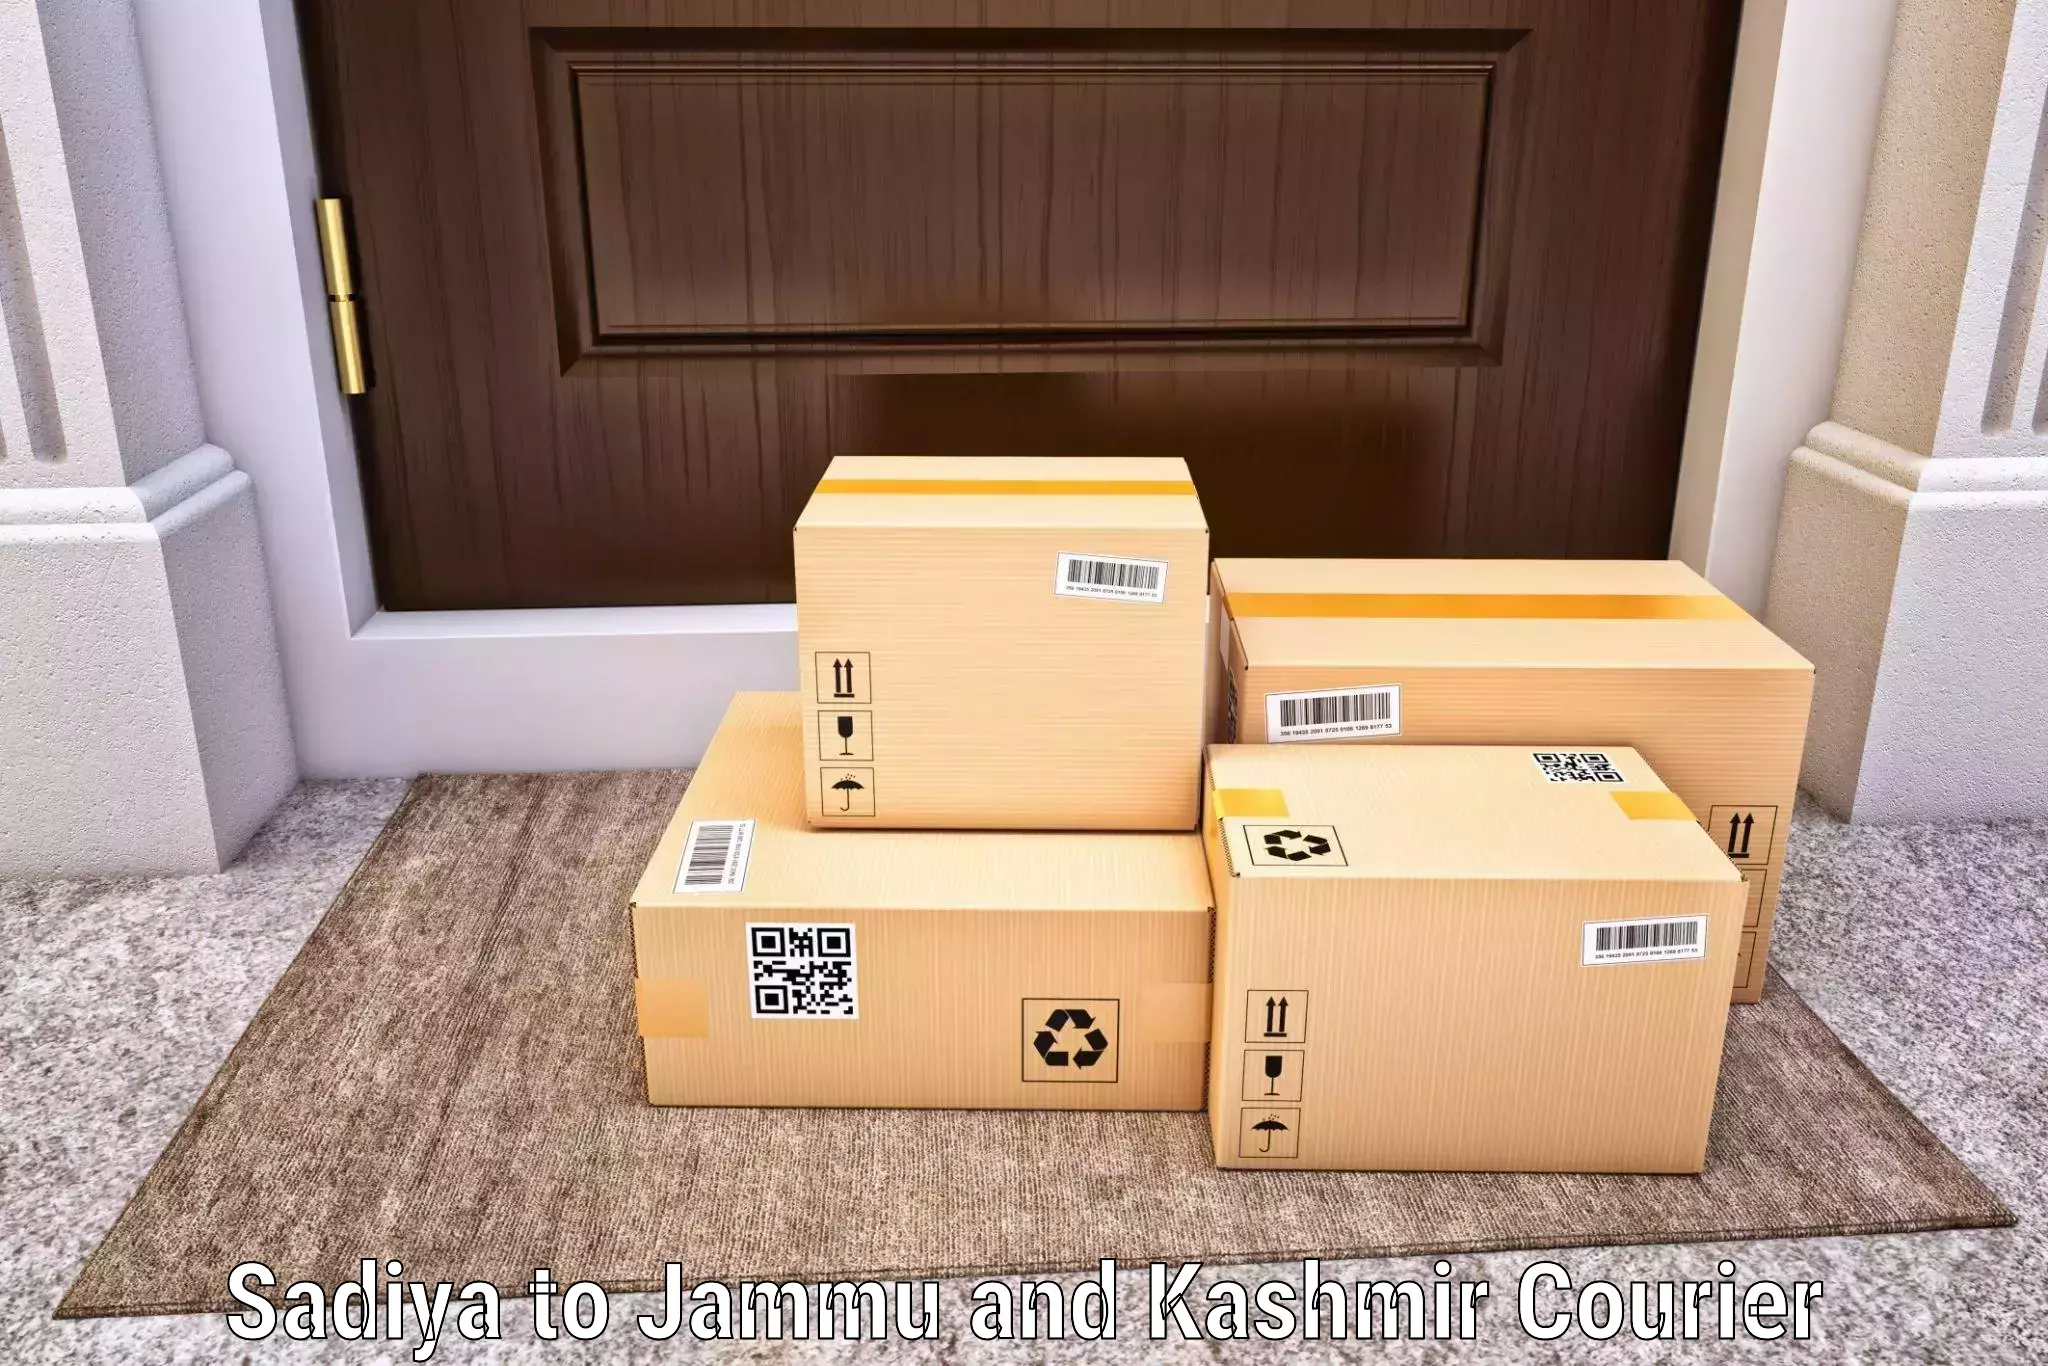 24-hour courier service Sadiya to University of Kashmir Srinagar